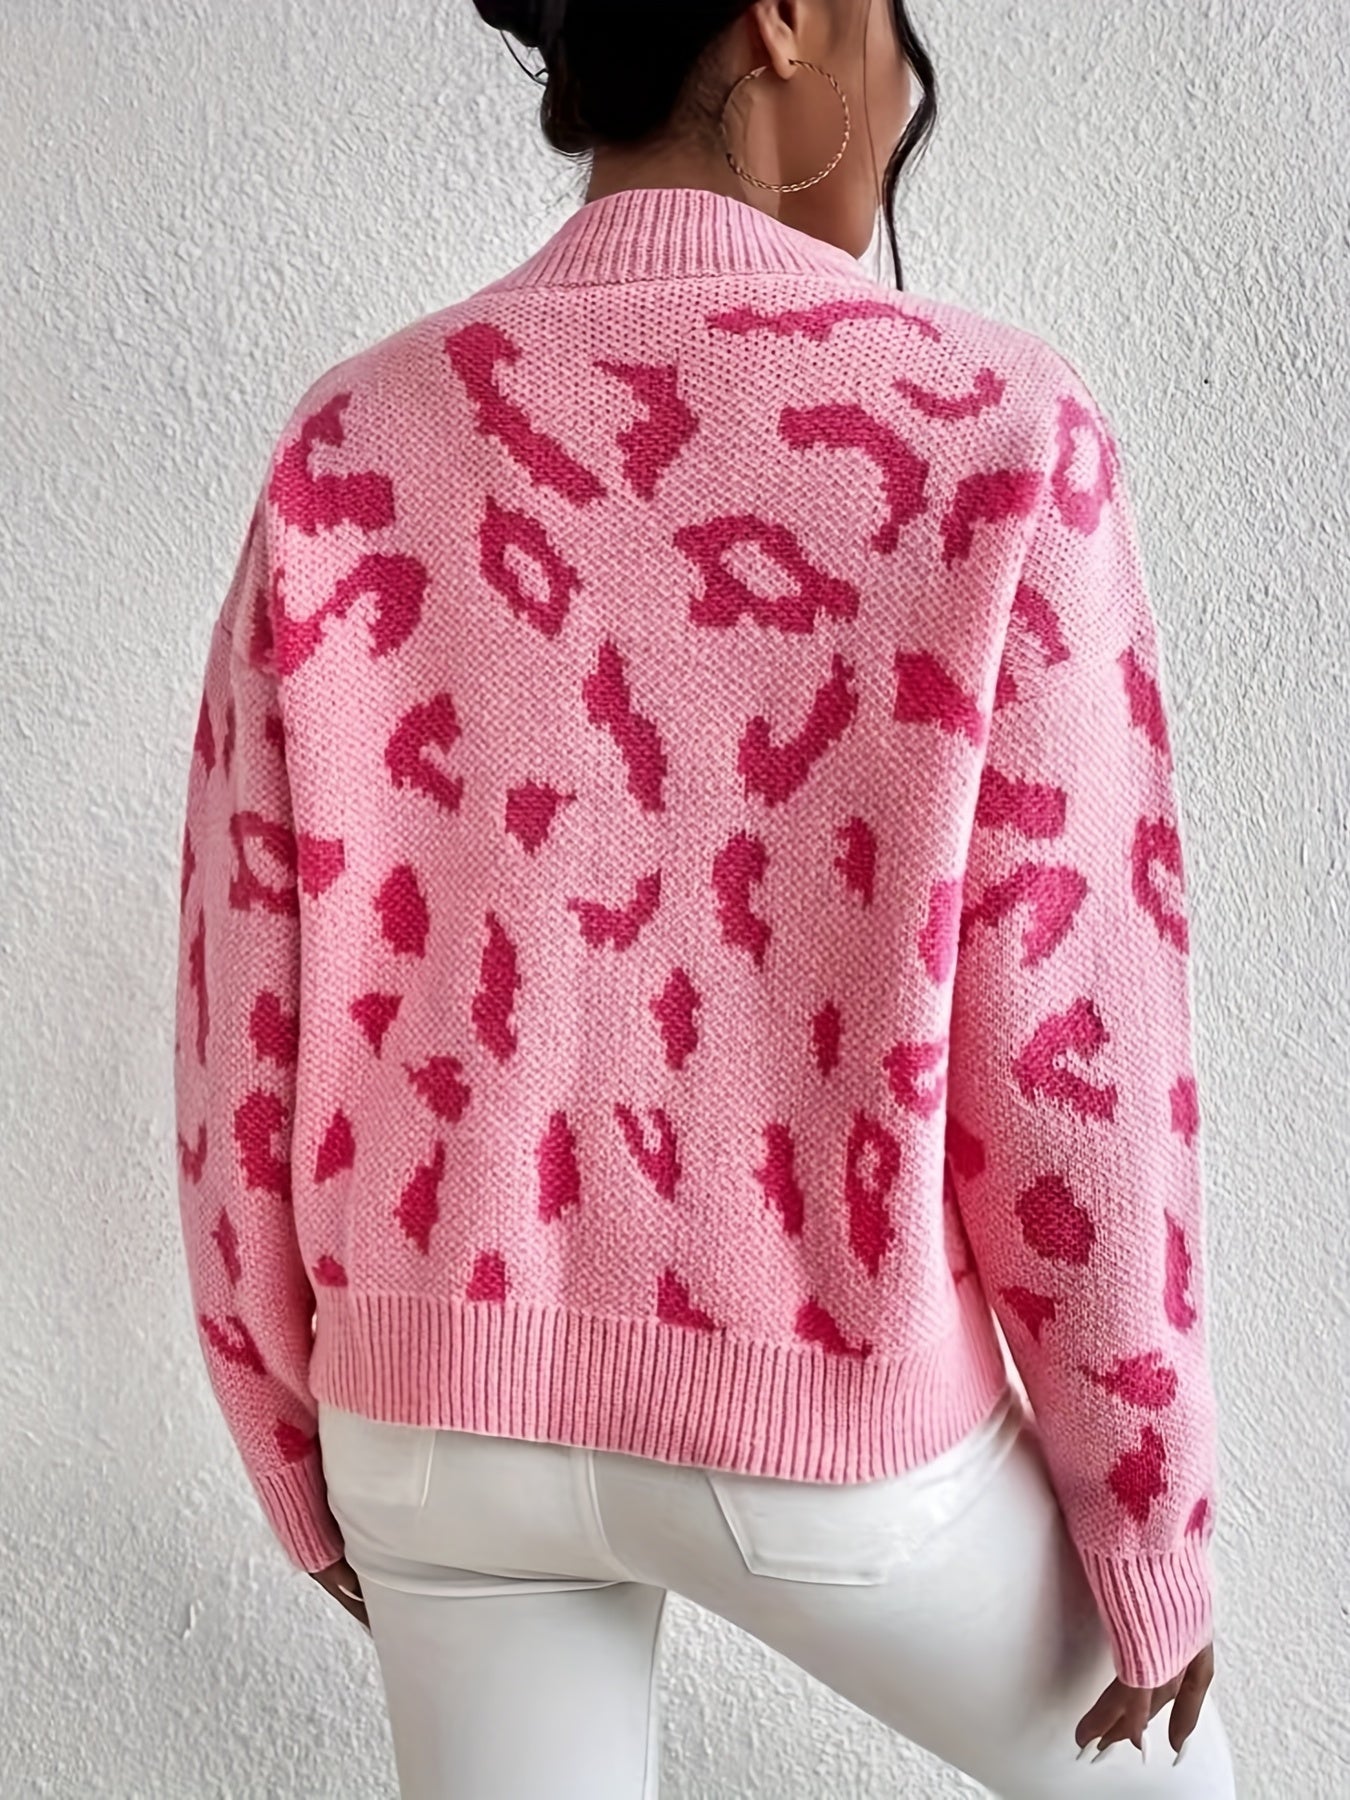 Antmvs Leopard Pattern Mock Neck Sweater, Casual Long Sleeve Sweater For Fall & Winter, Women's Clothing